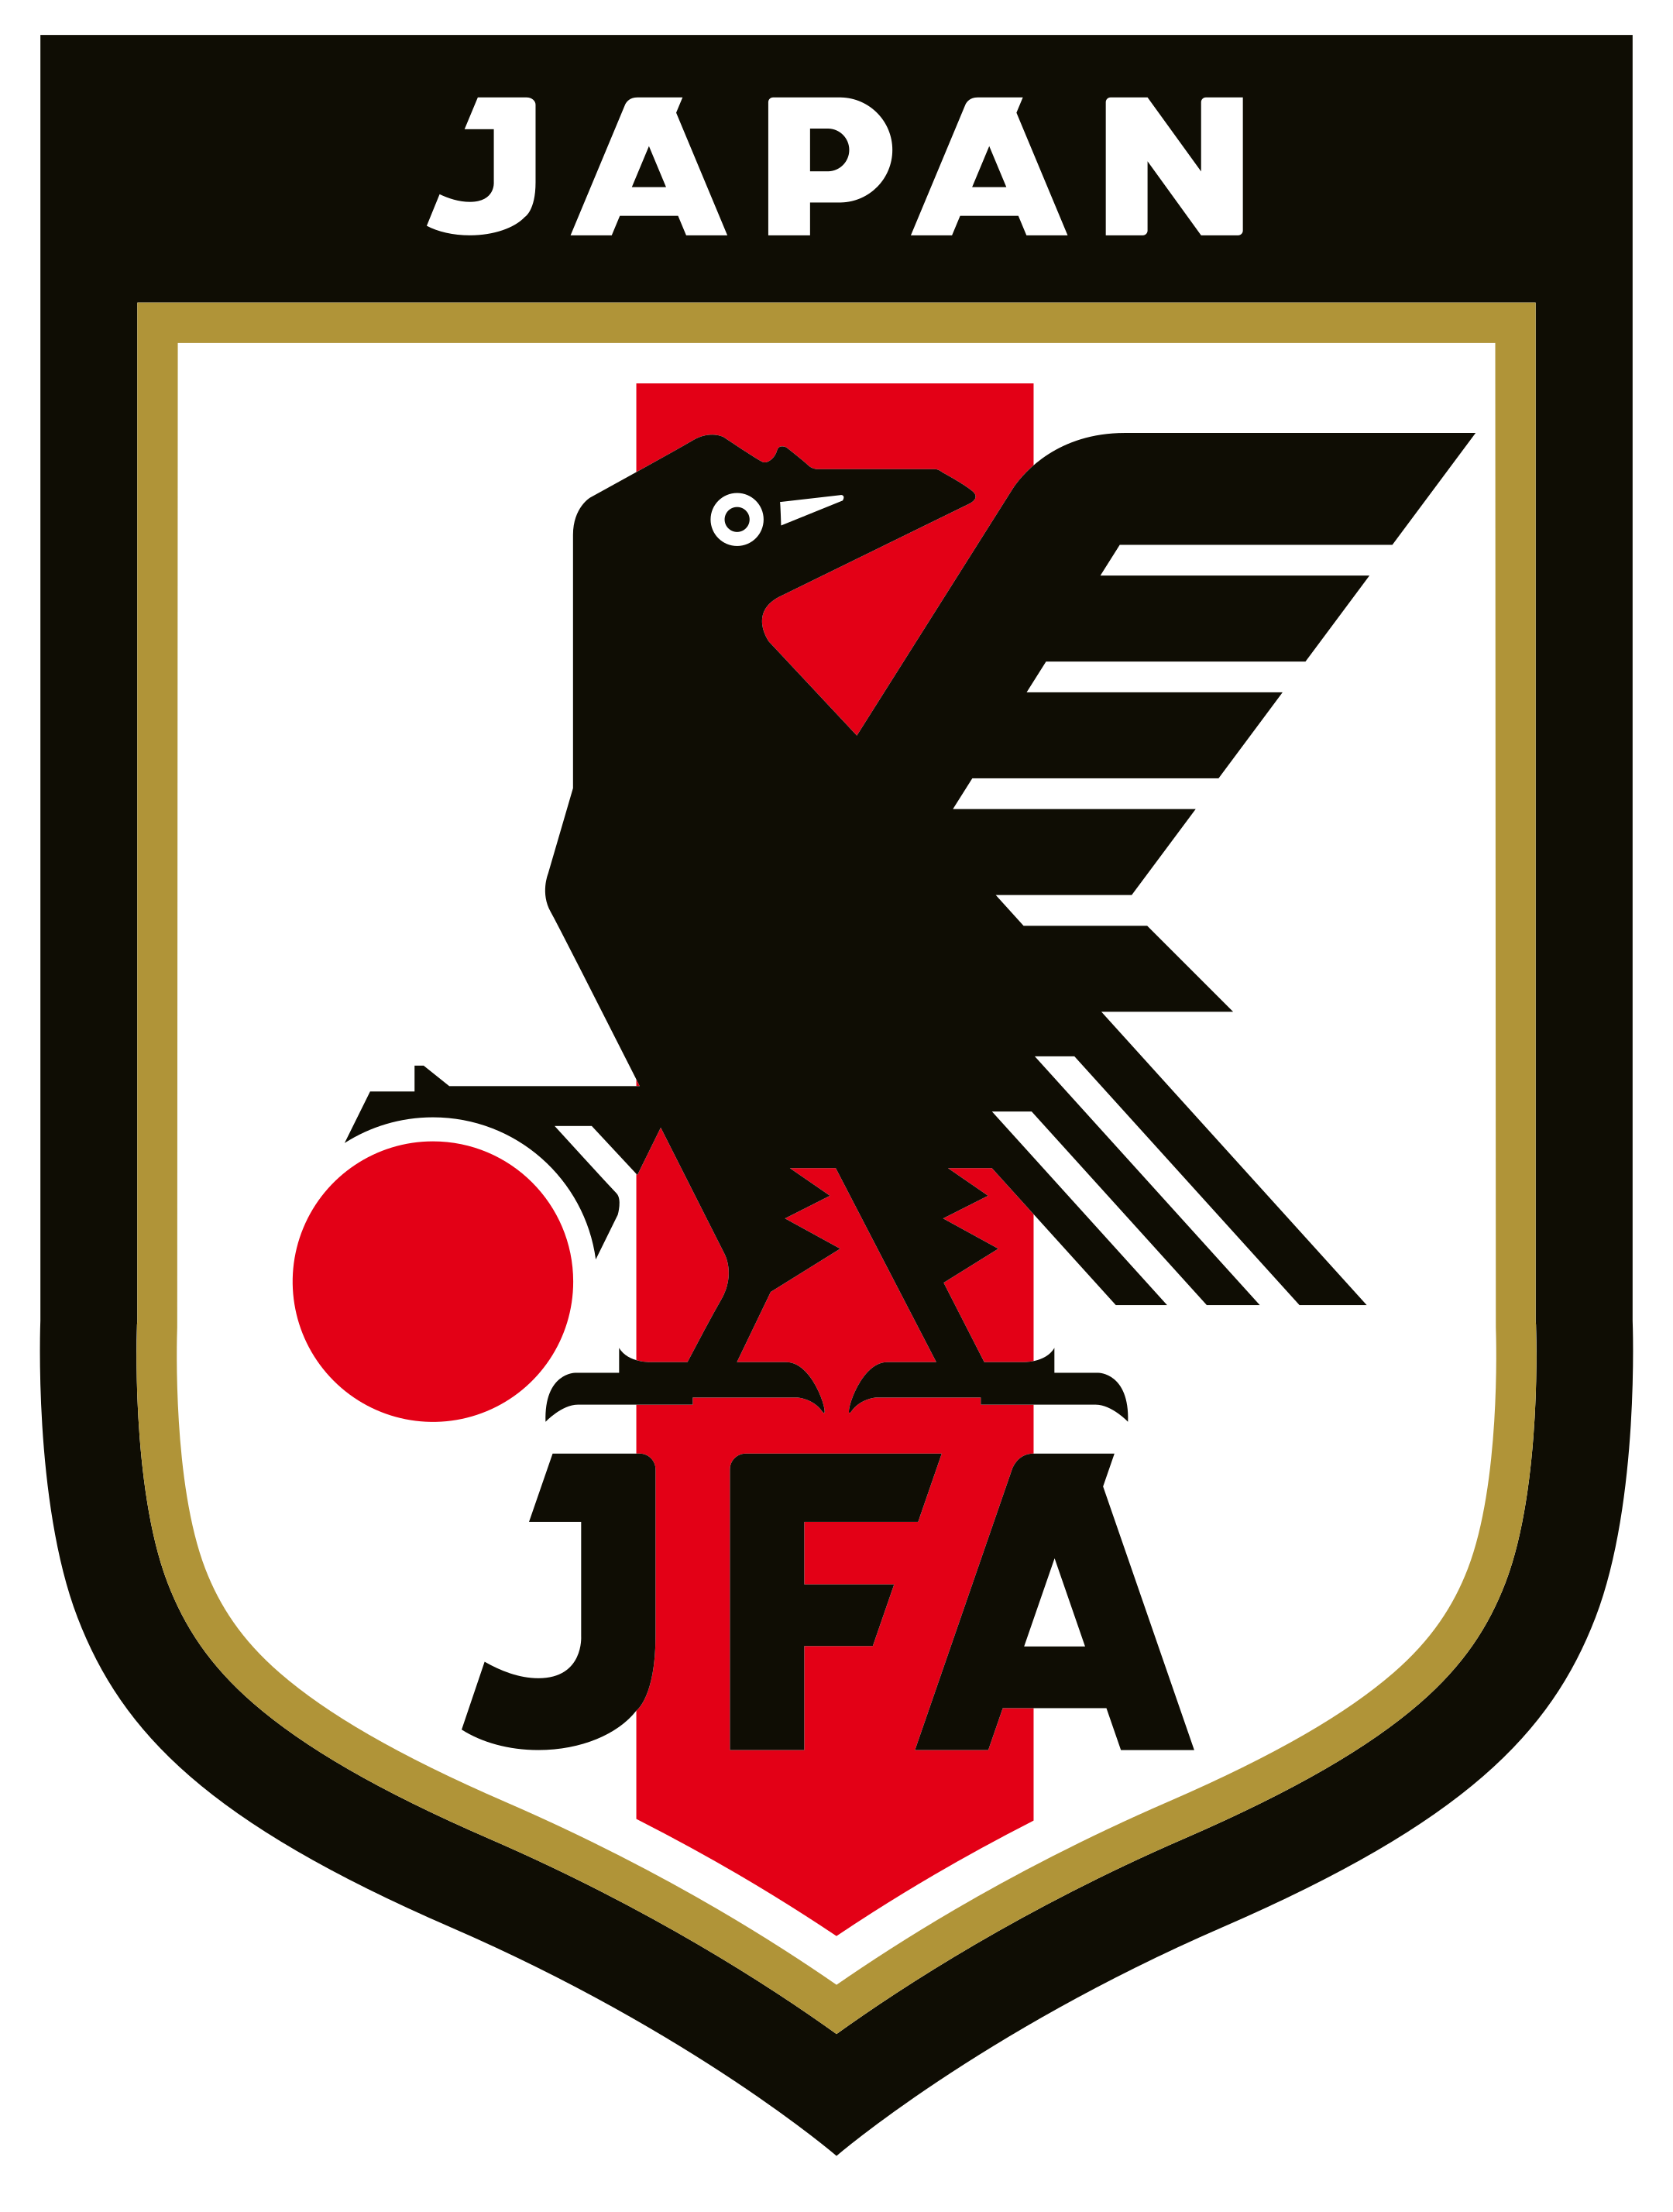 japan national football team logo 1 - Japan National Football Team Logo